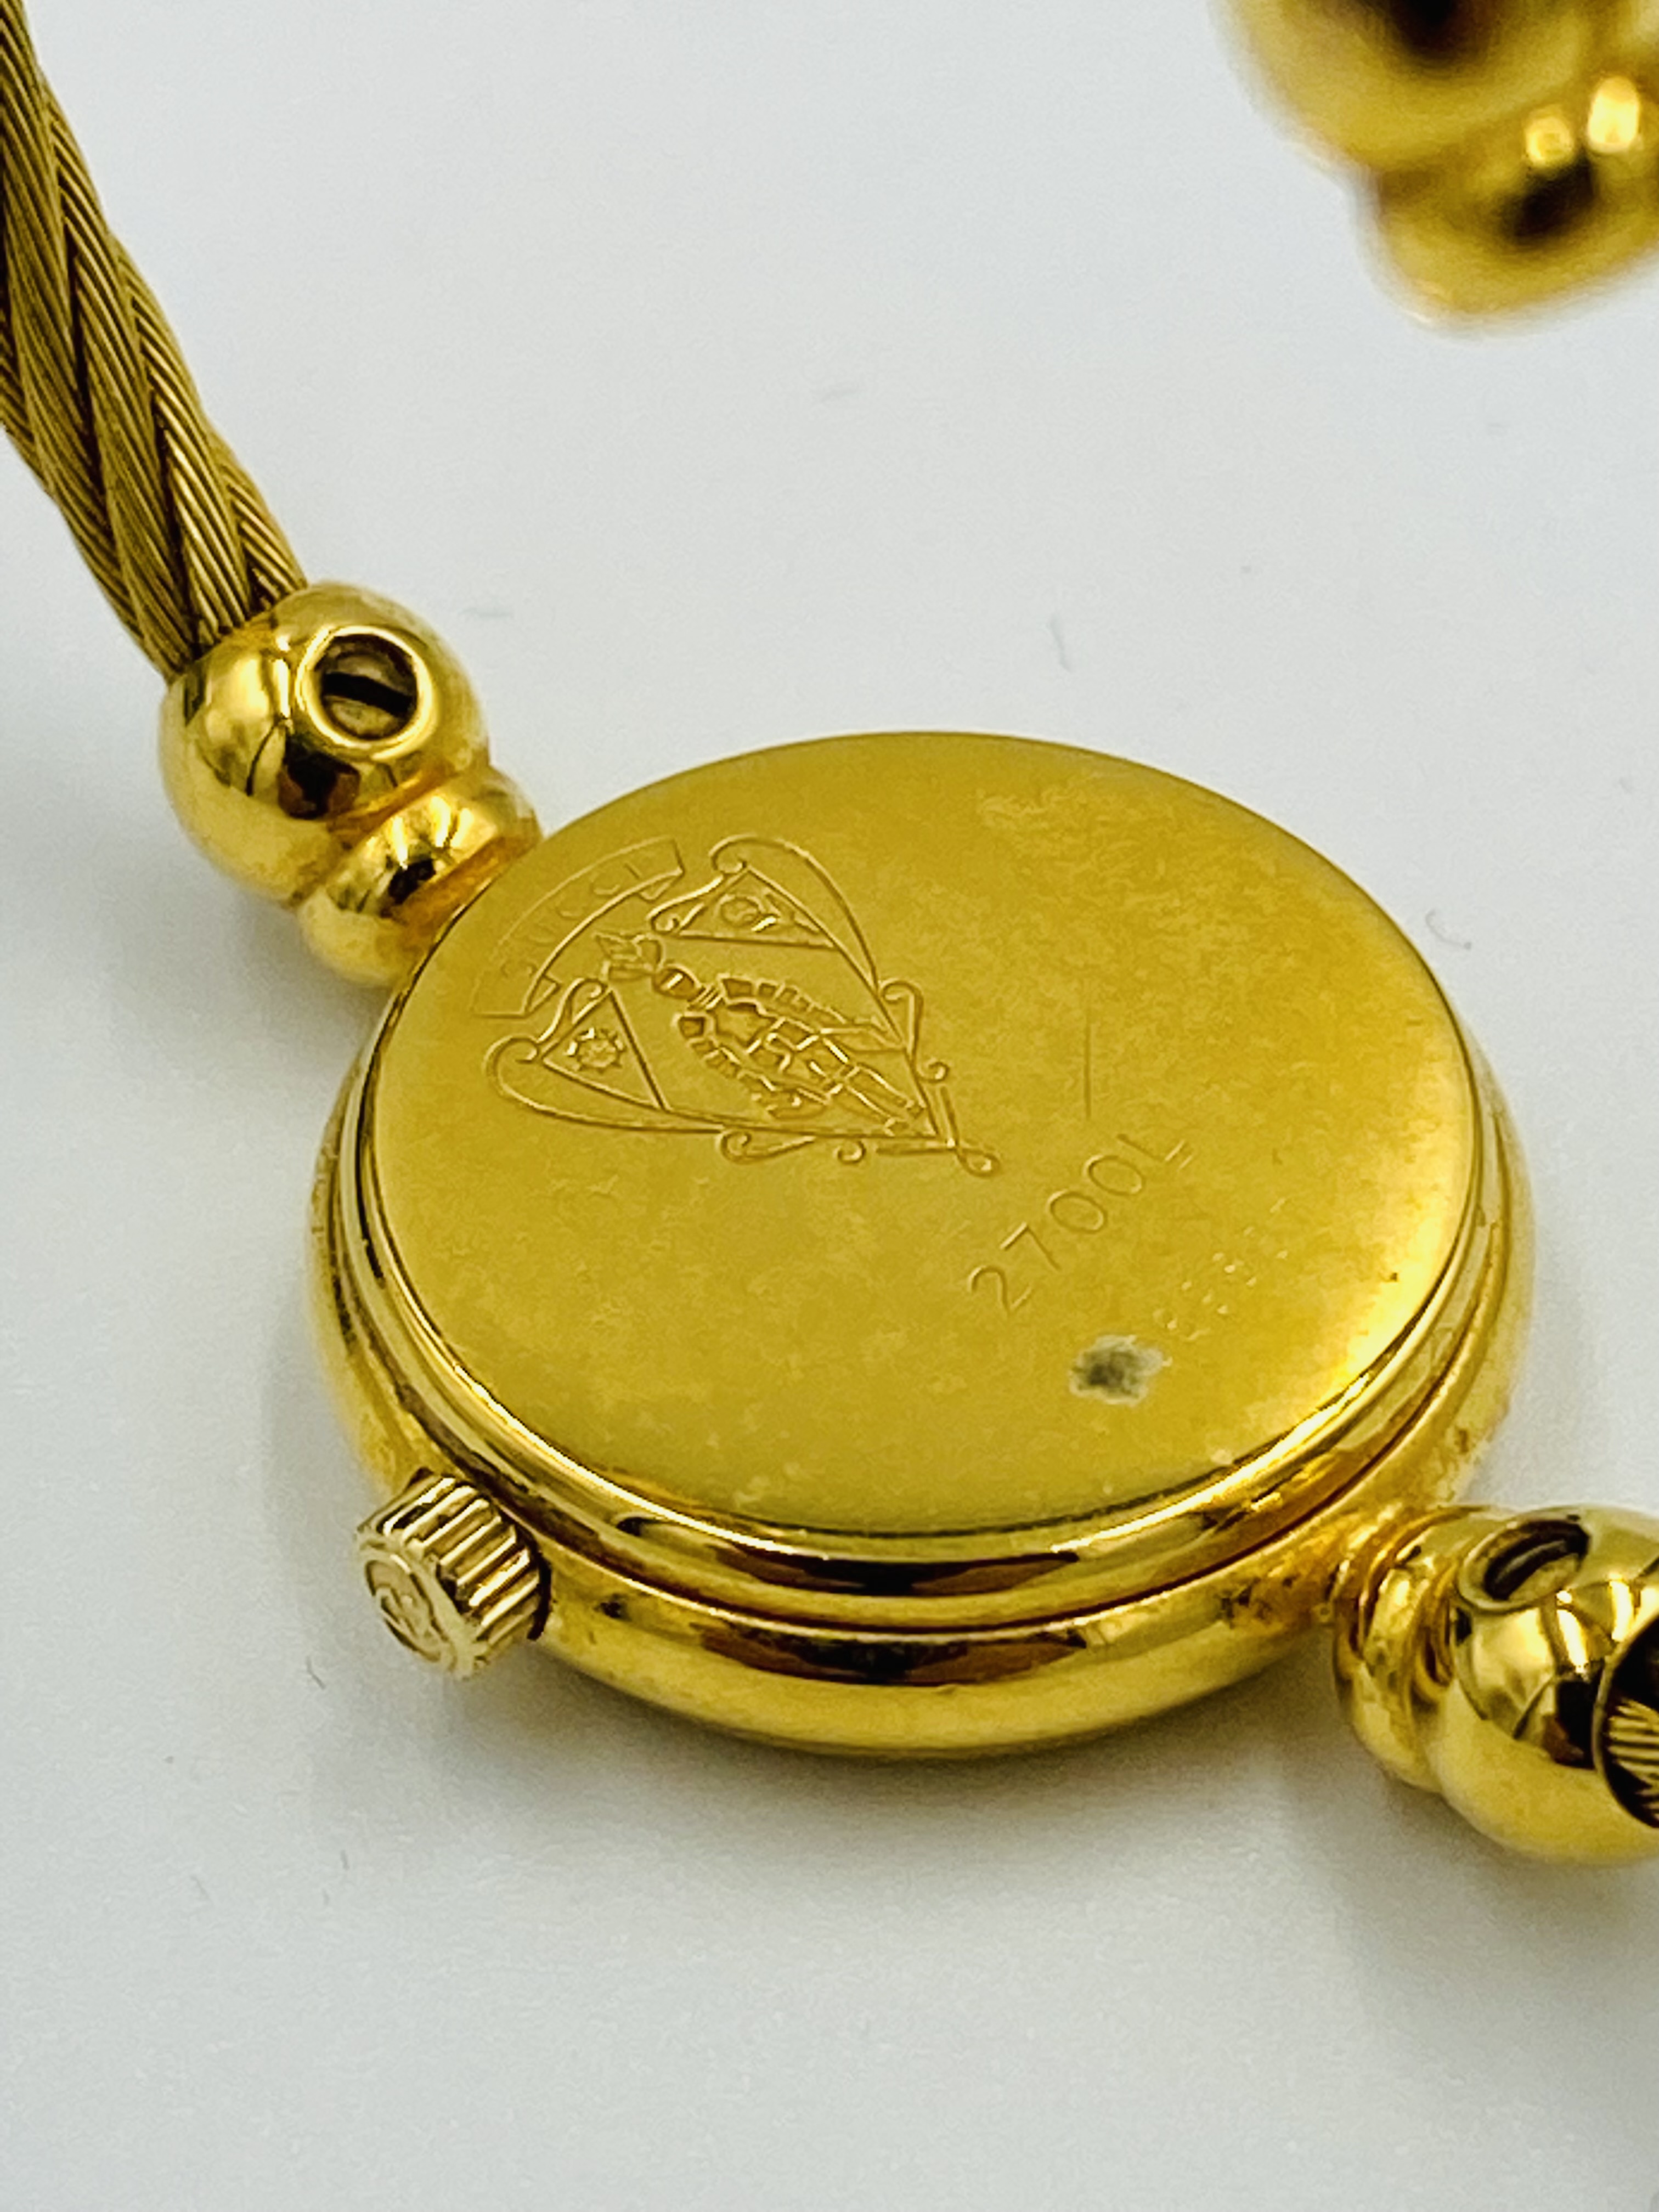 Gucci 2700L gold plated quartz wrist watch - Image 5 of 6